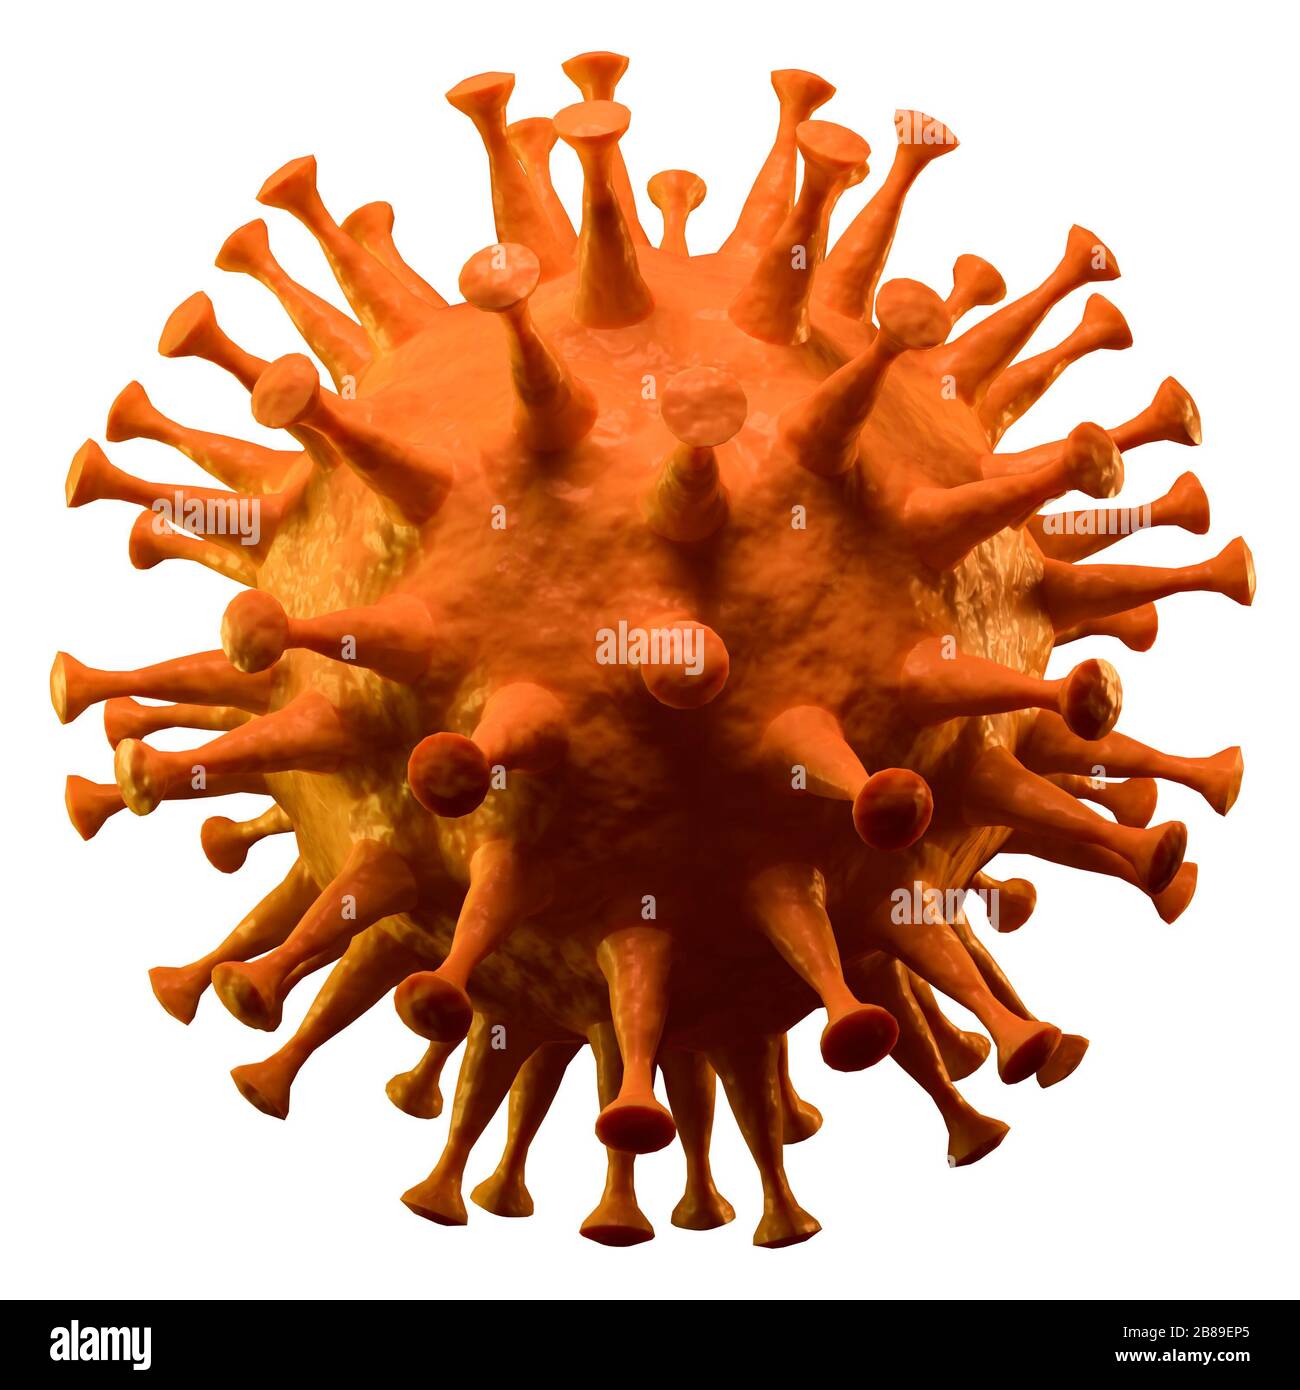 3D render: New Corona Virus isolated on white. Sars-CoV-2 virus causing Covid-19 disease. Stock Photo